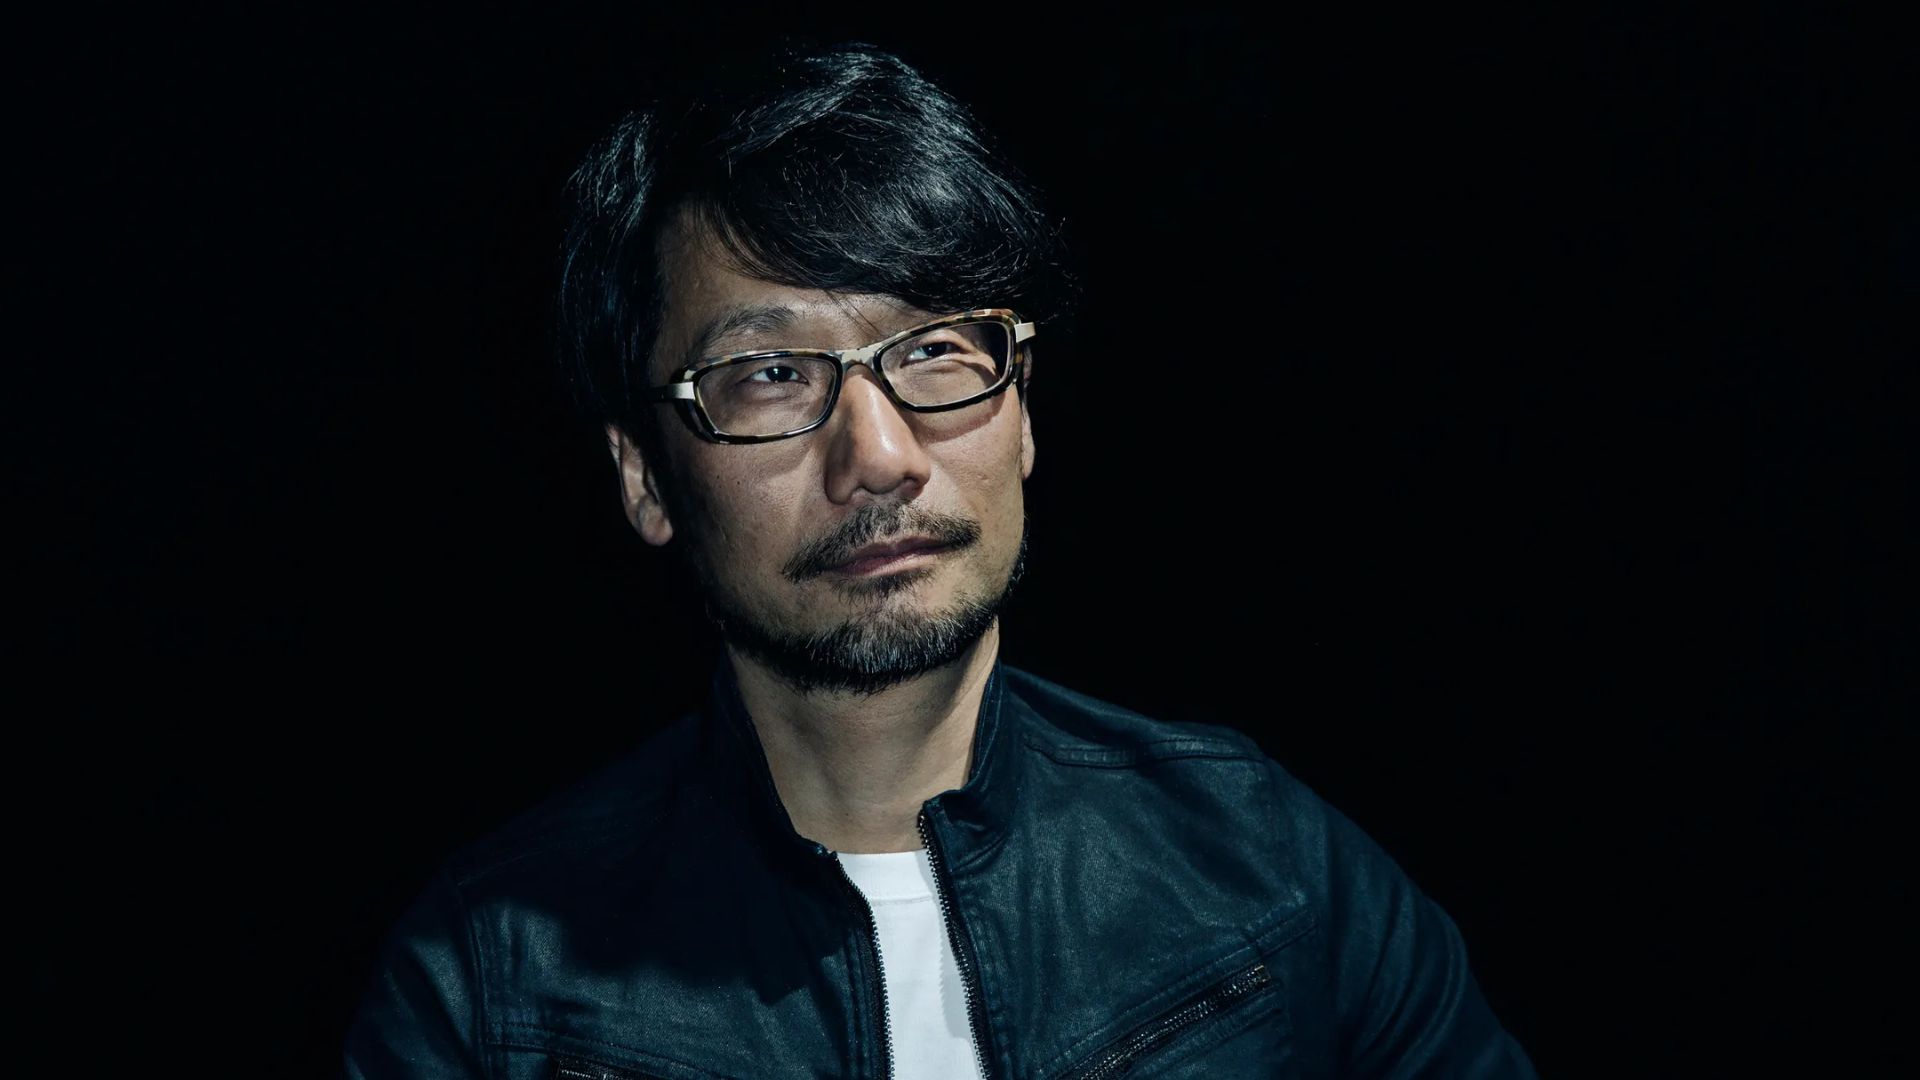 Hideo Kojima Horror Game Reportedly Code Named Overdose